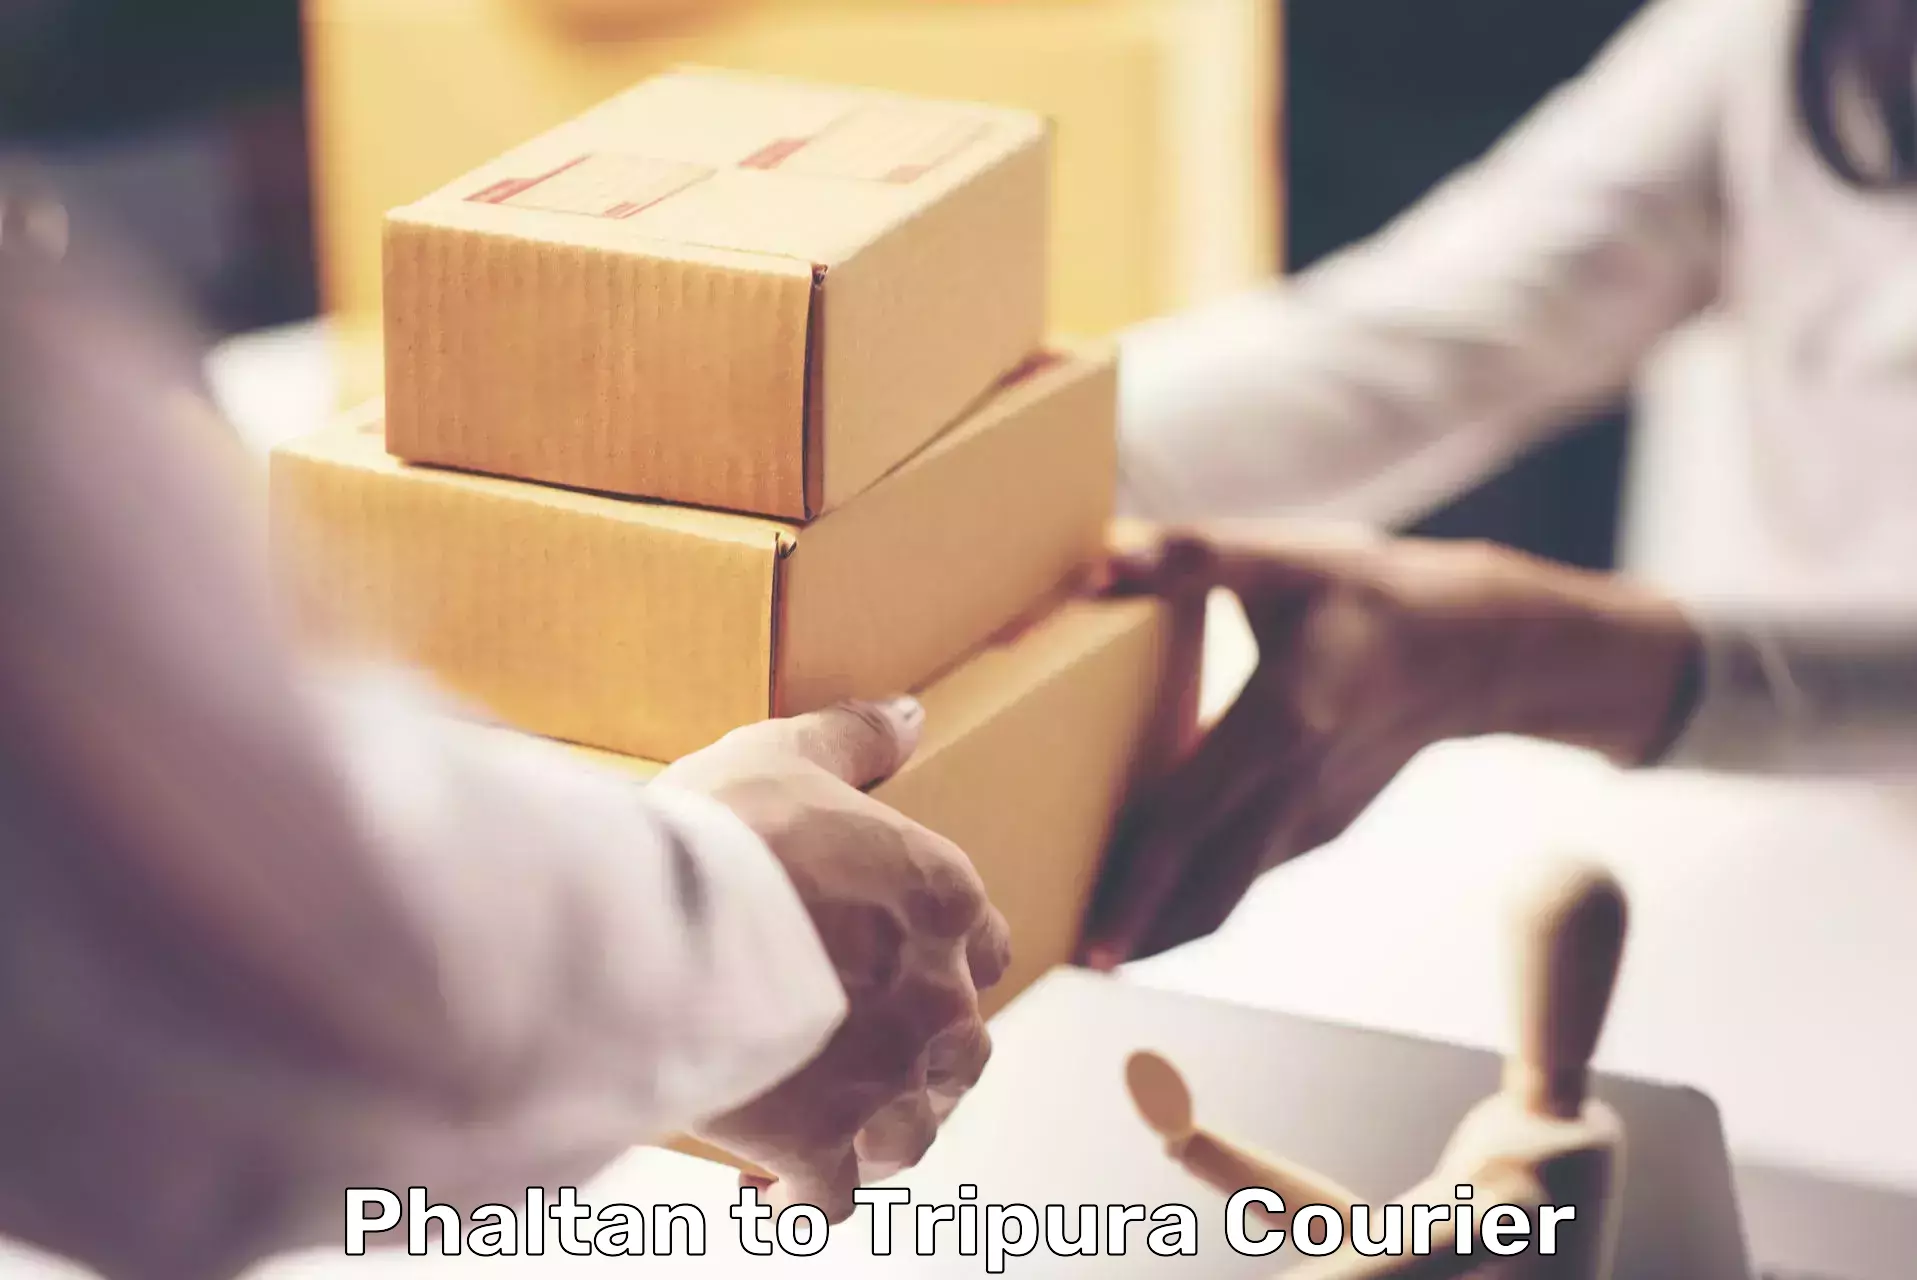 Professional courier handling Phaltan to IIIT Agartala